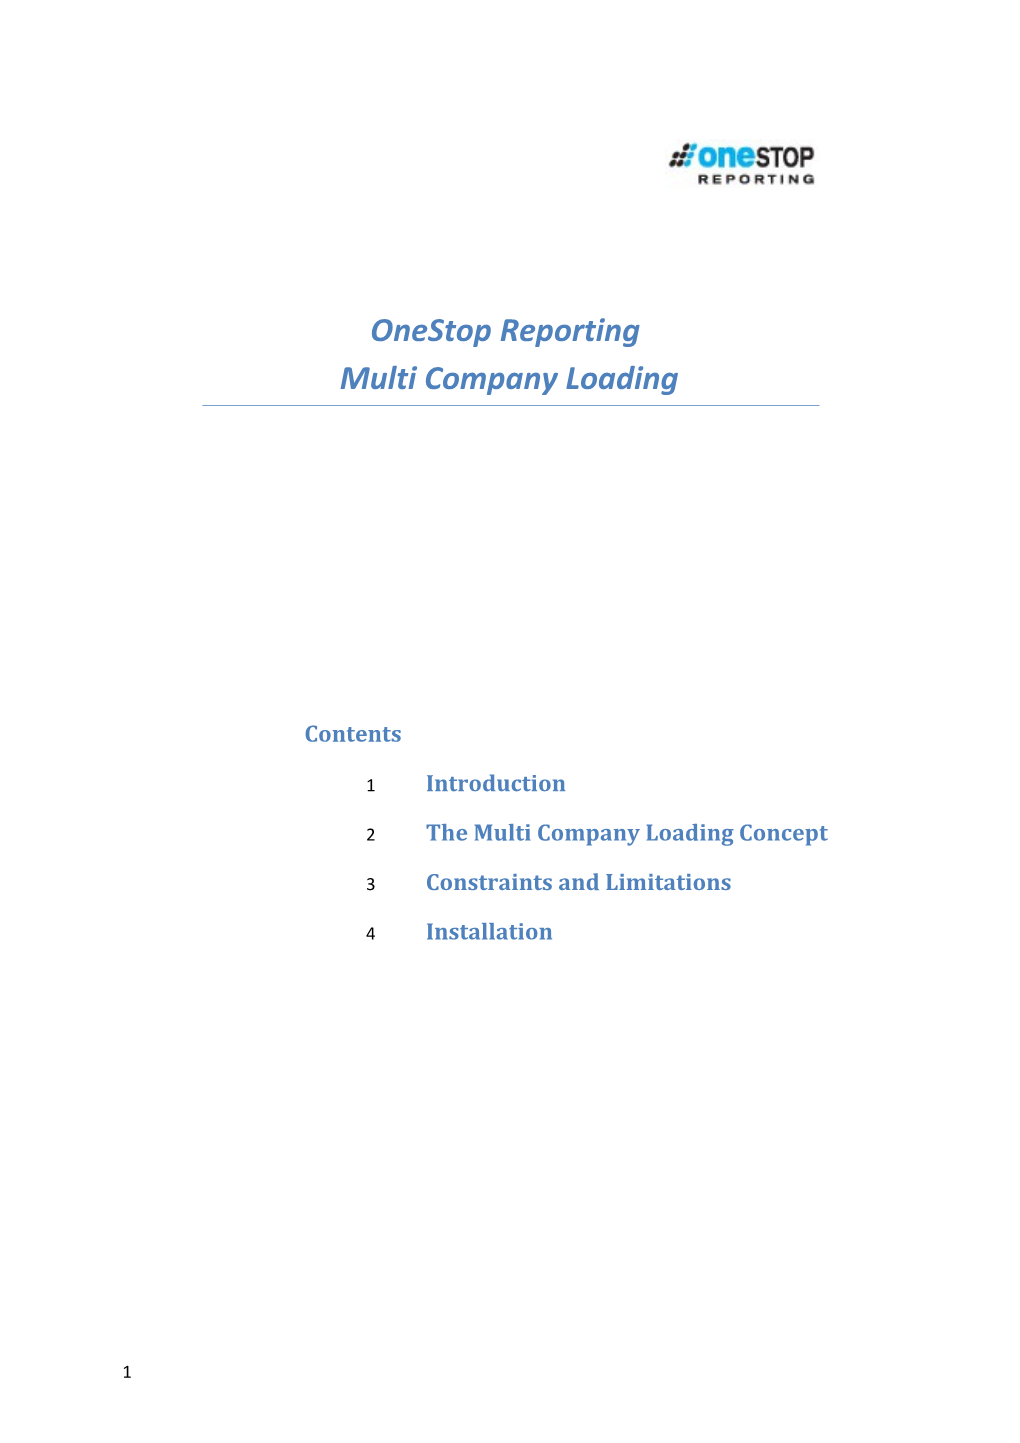 Onestop Reporting Multi Company Loading